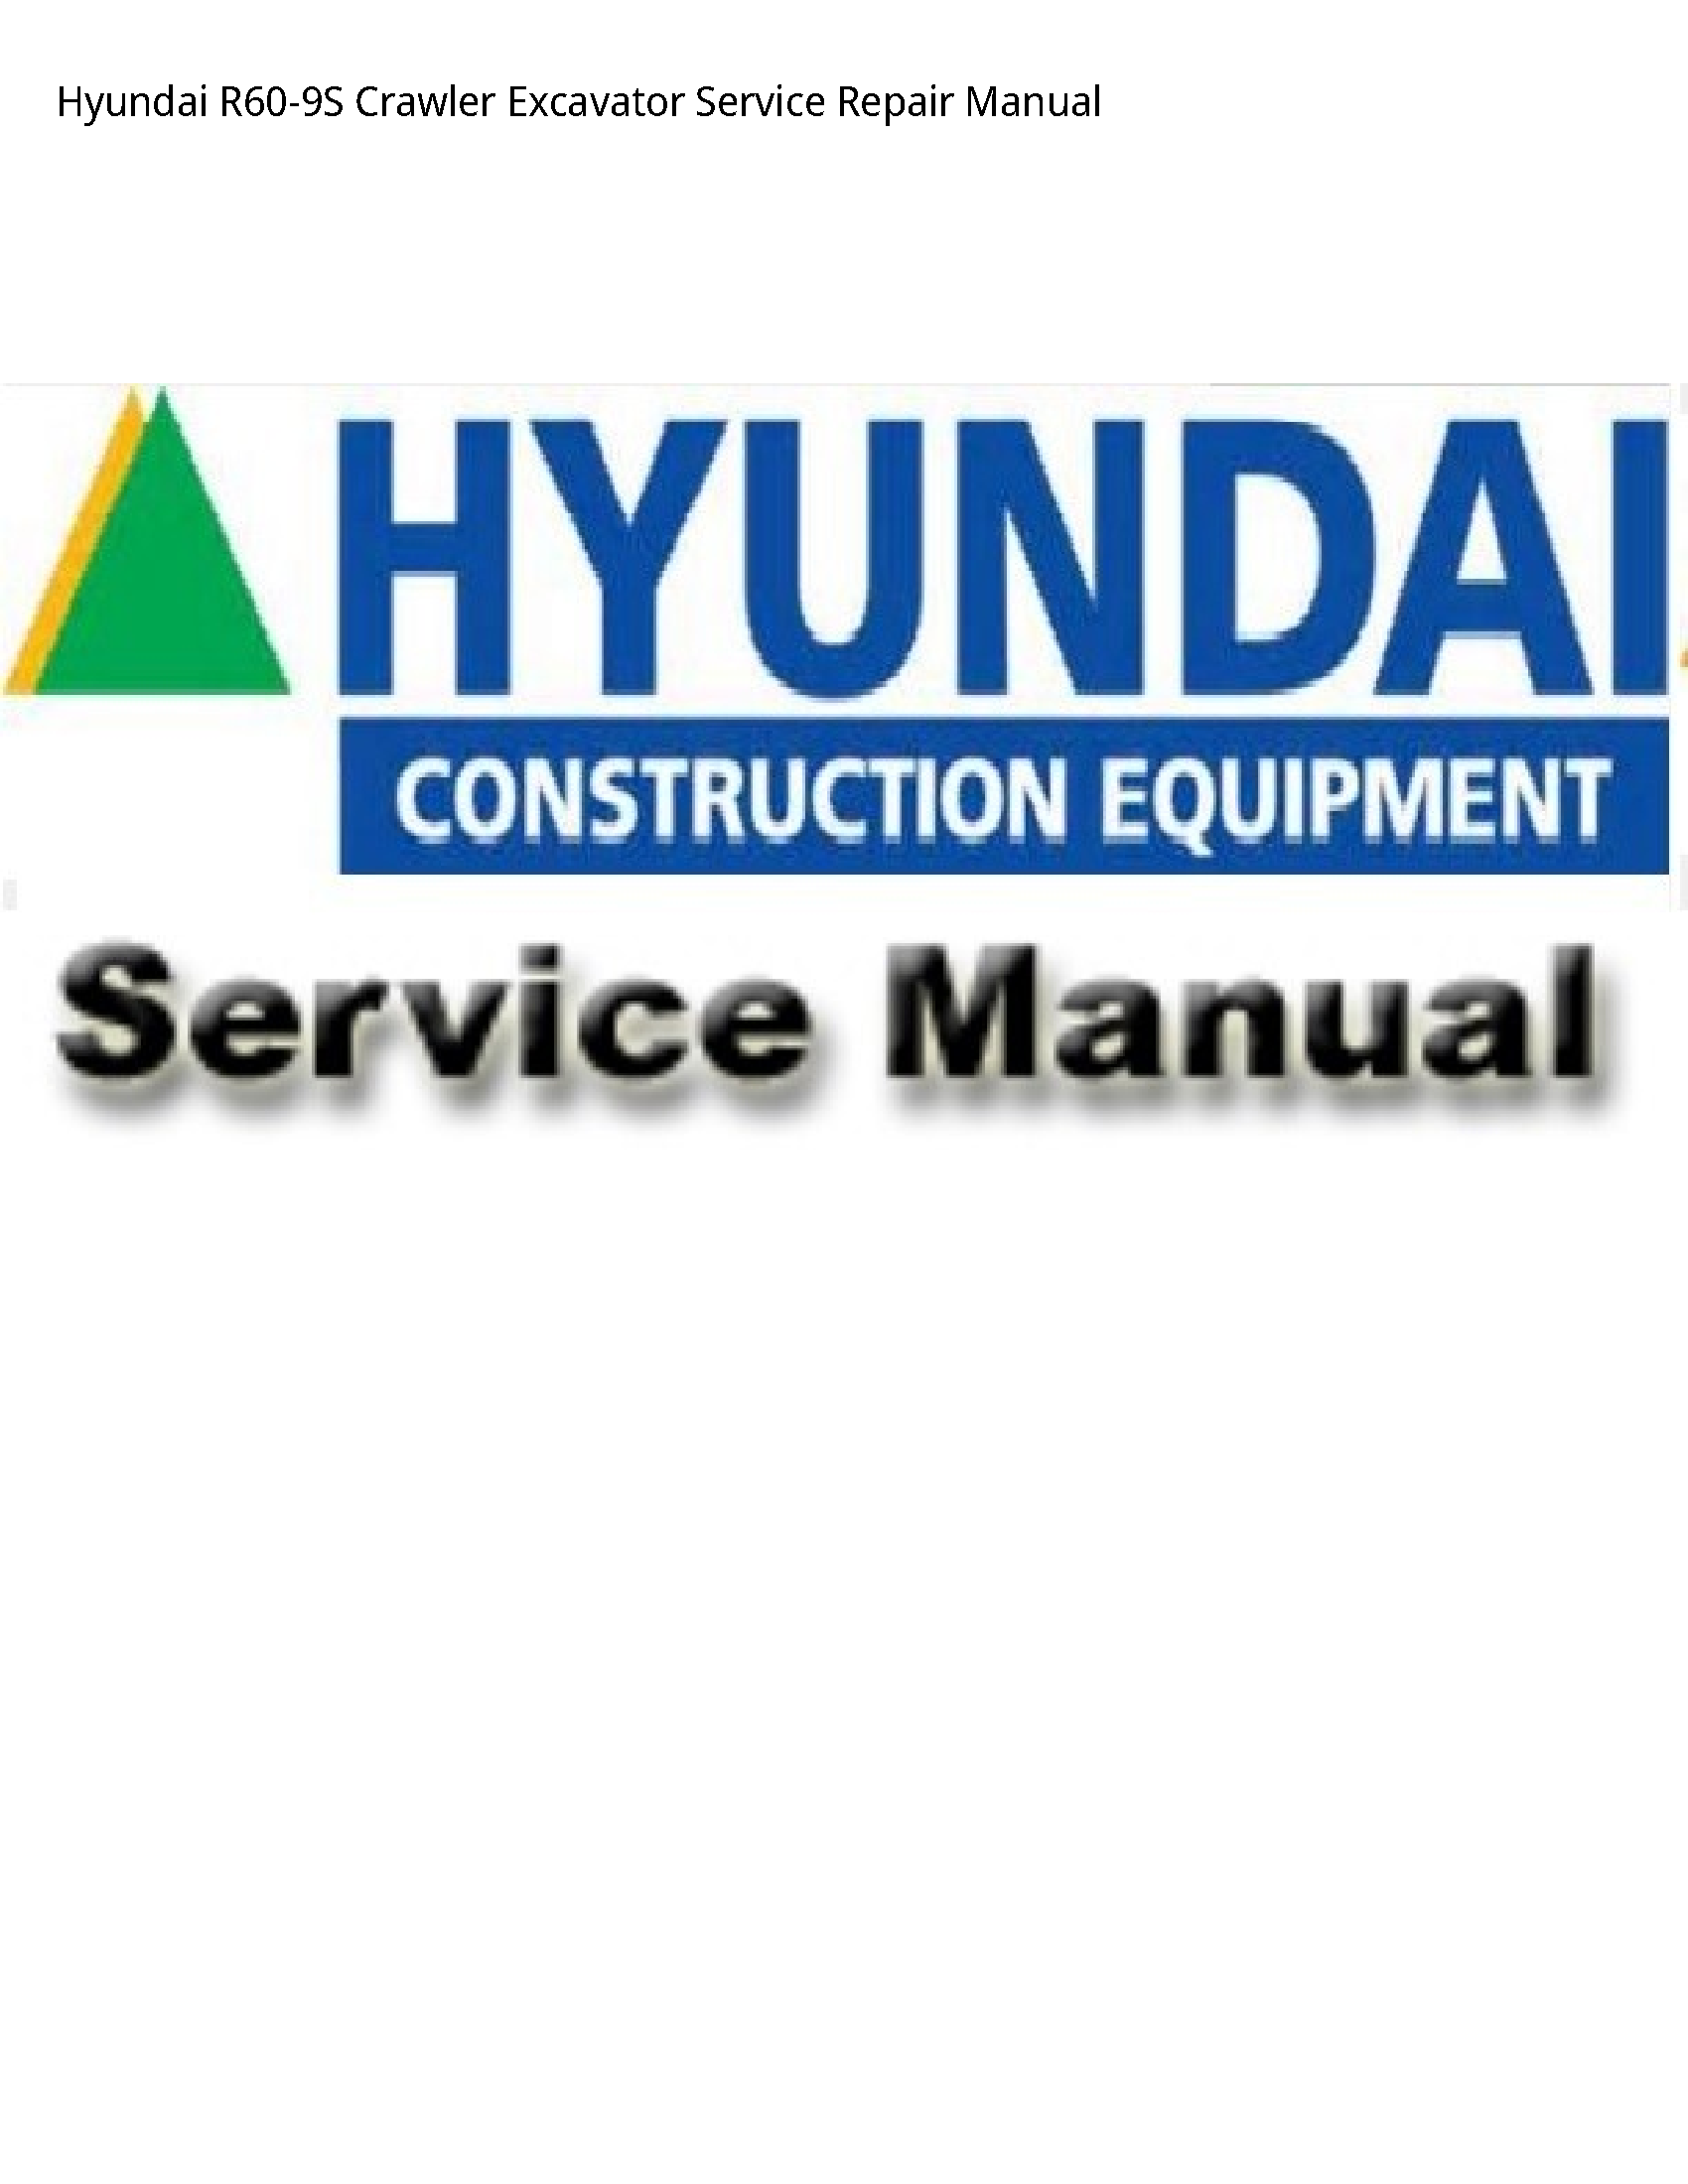 Hyundai R60-9S Crawler Excavator manual